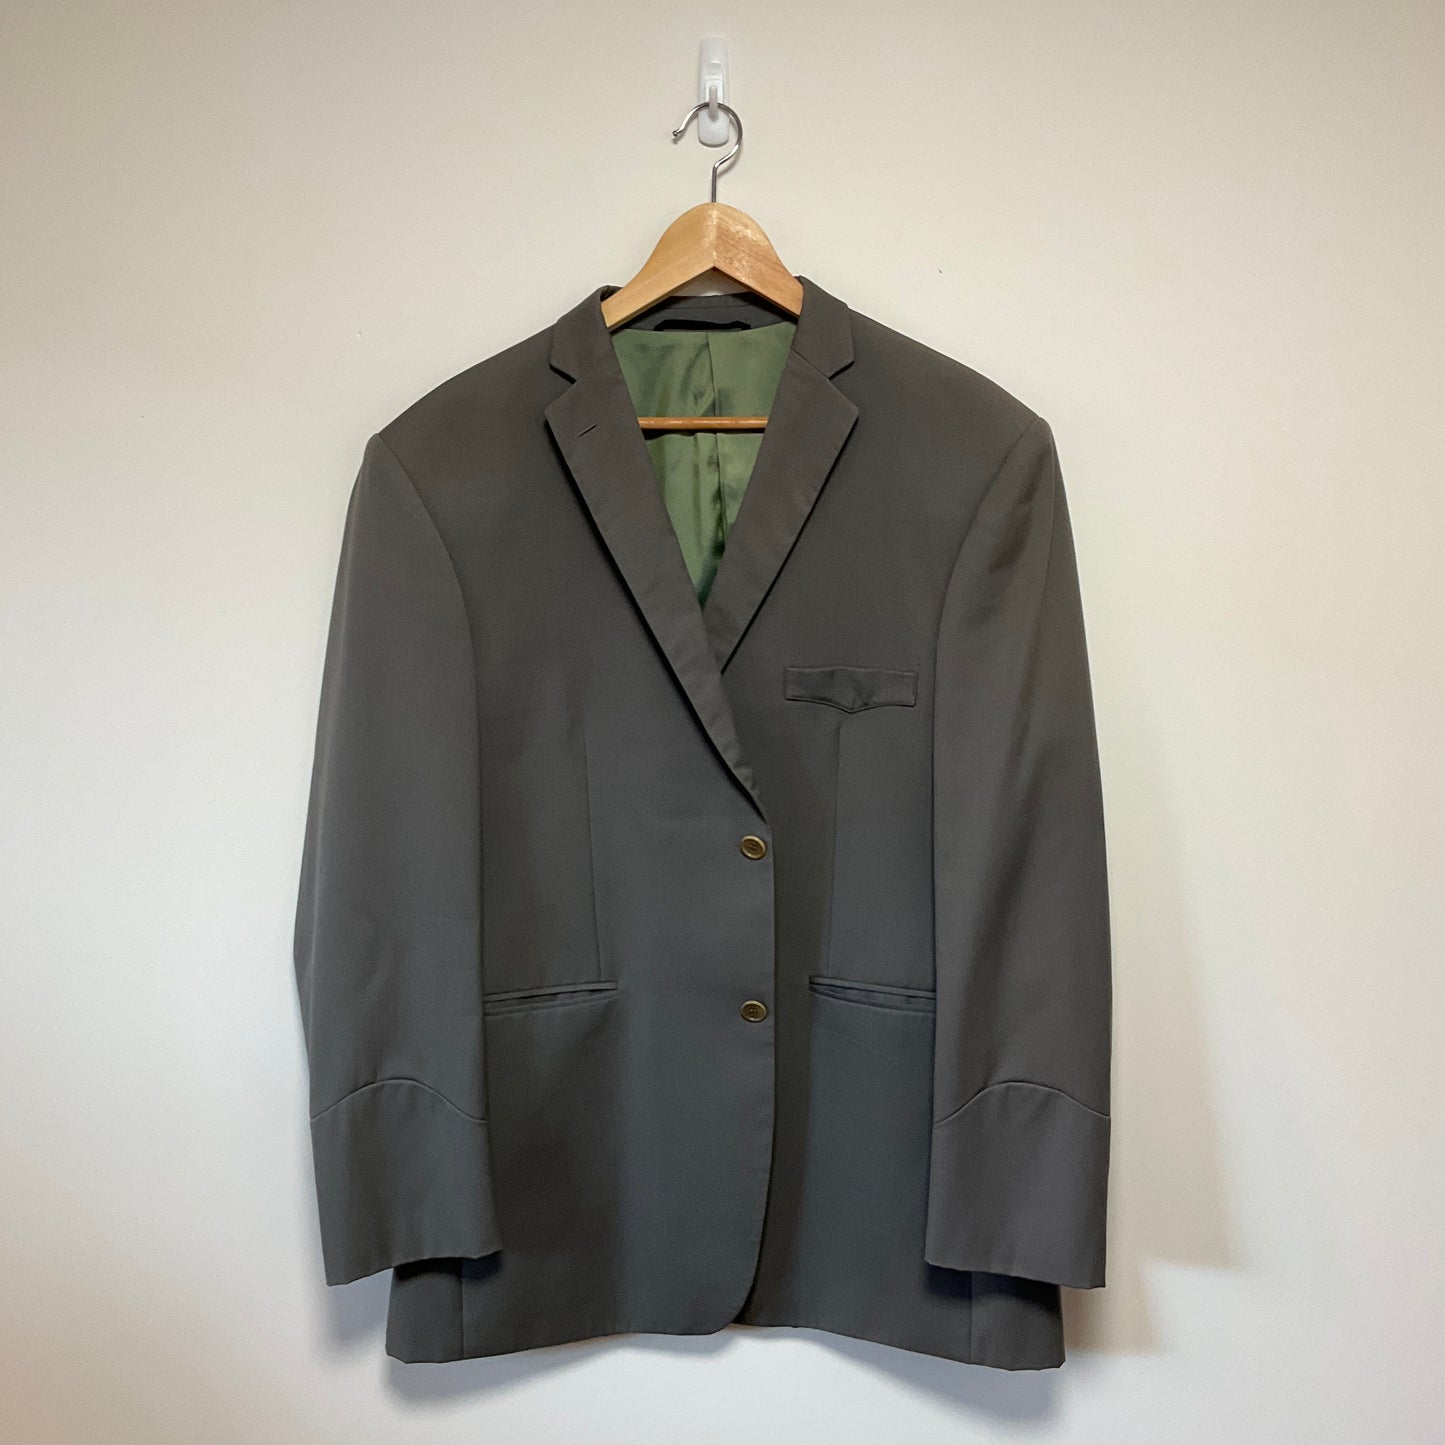 Zambesi - Air NZ Uniform Jacket